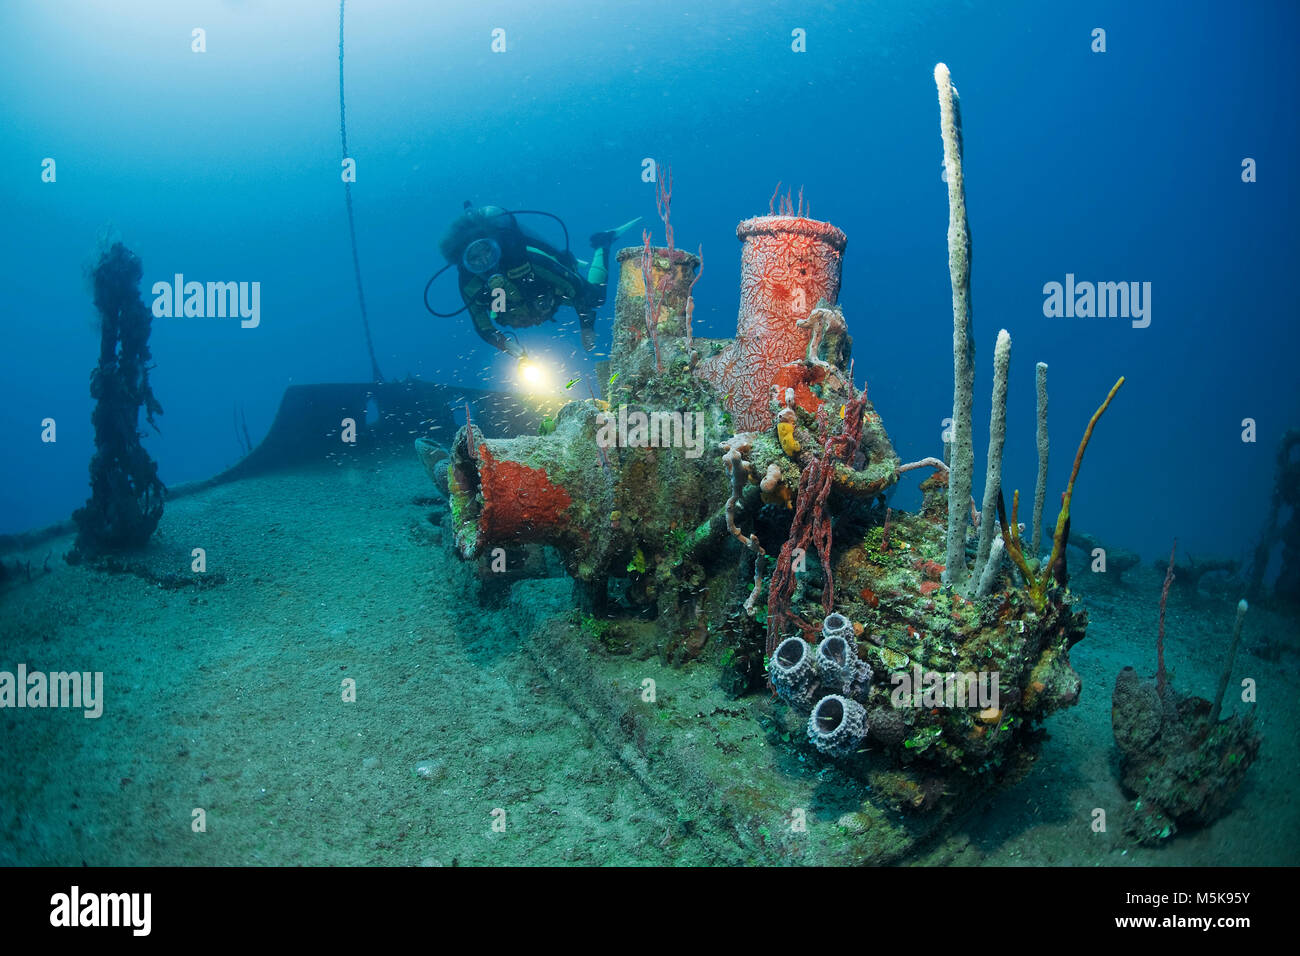 Scuba diver at Halliburton ship wreck, overgrown with sponges, Utila island, Bay islands, Honduras, Caribbean Stock Photo